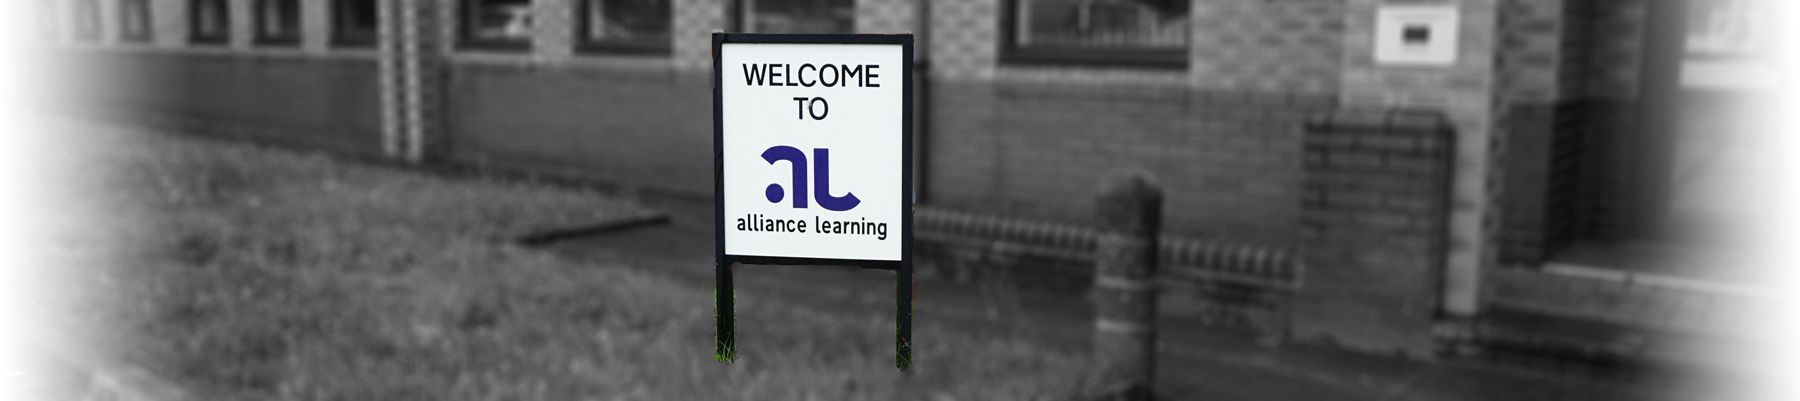 Alliance Learning Sign.jpeg